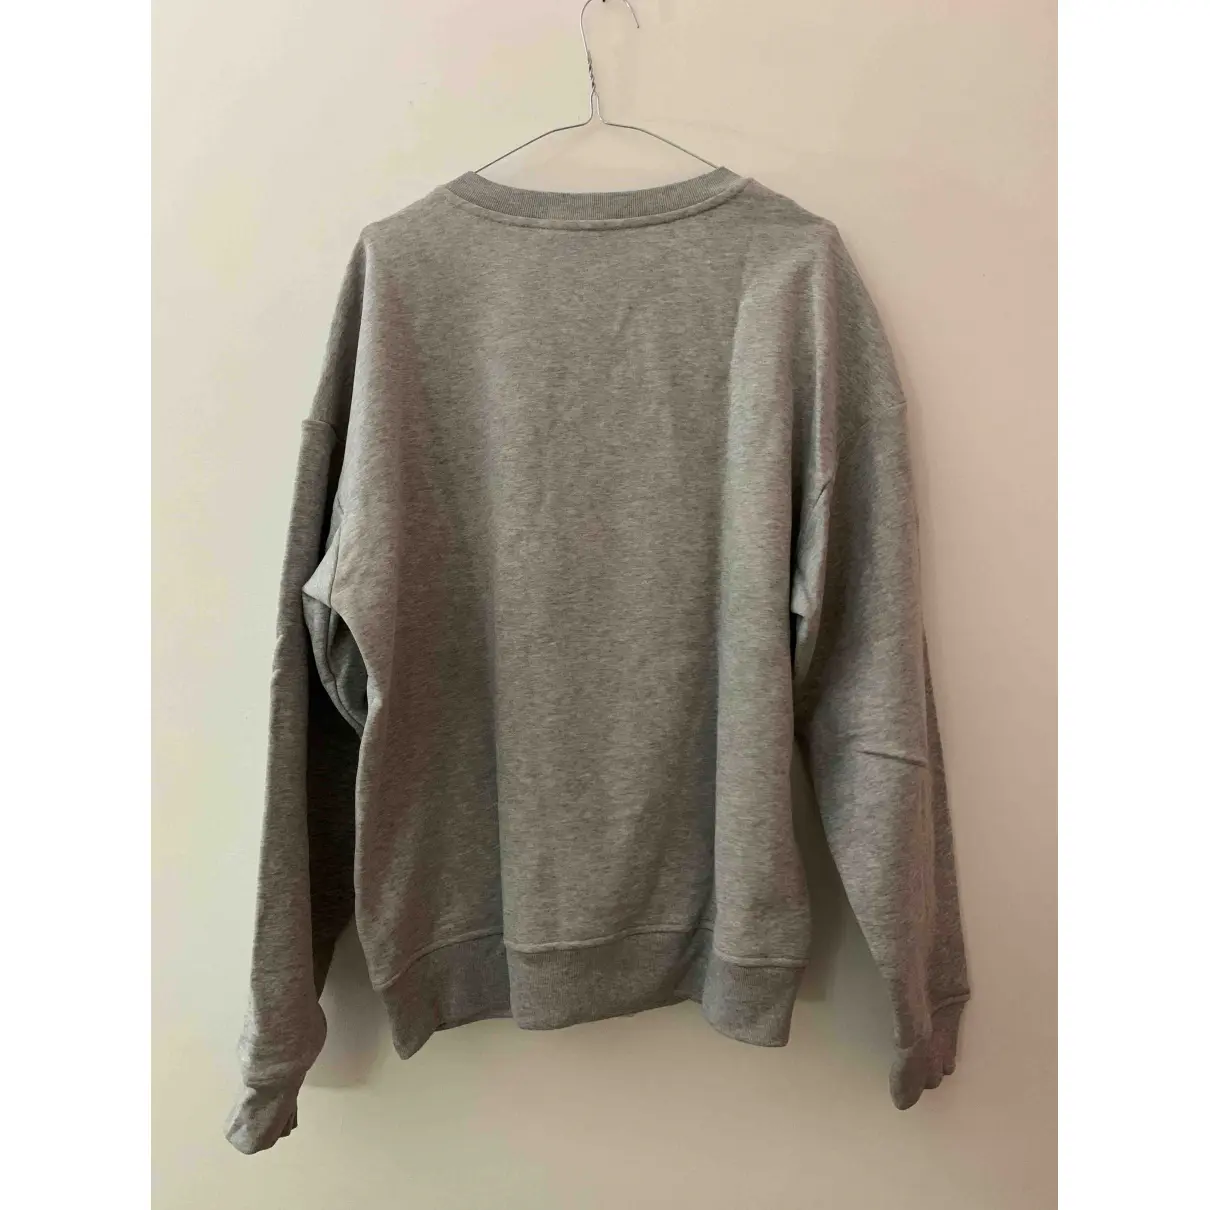 Buy Moschino Grey Cotton Knitwear & Sweatshirt online